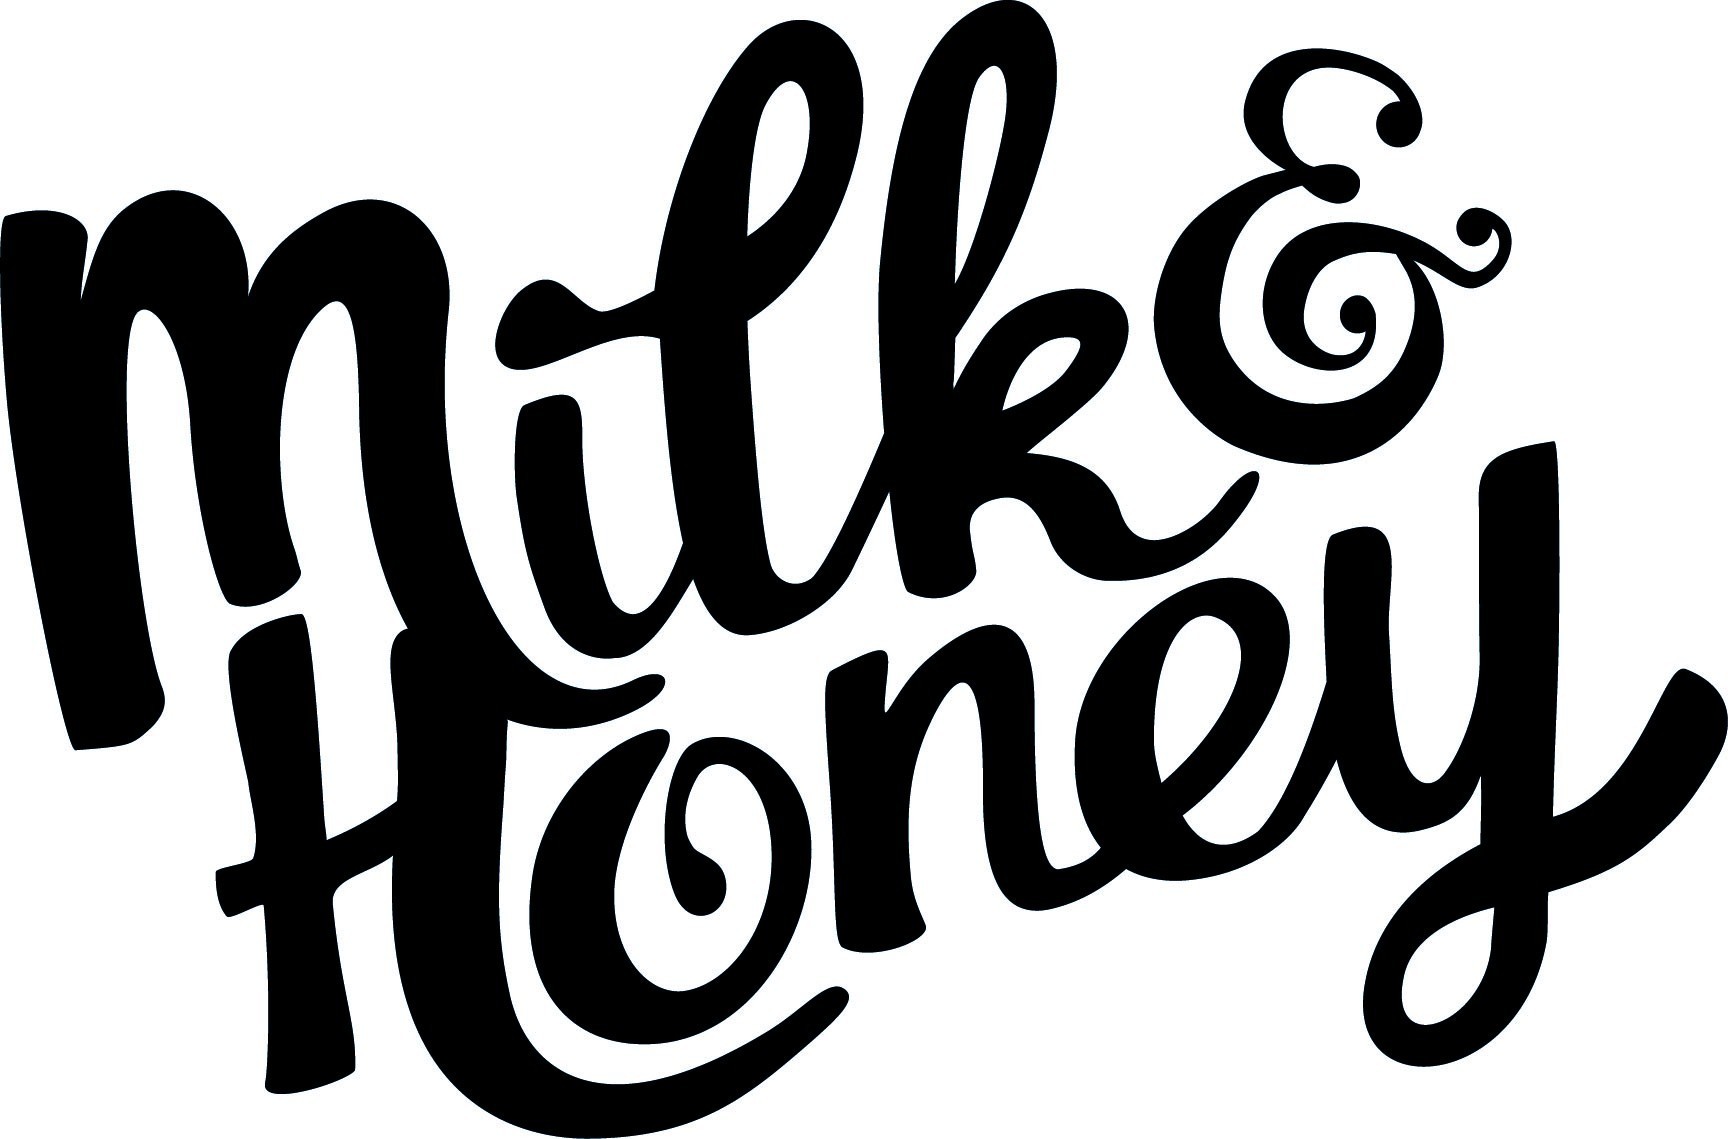 Milk & Honey